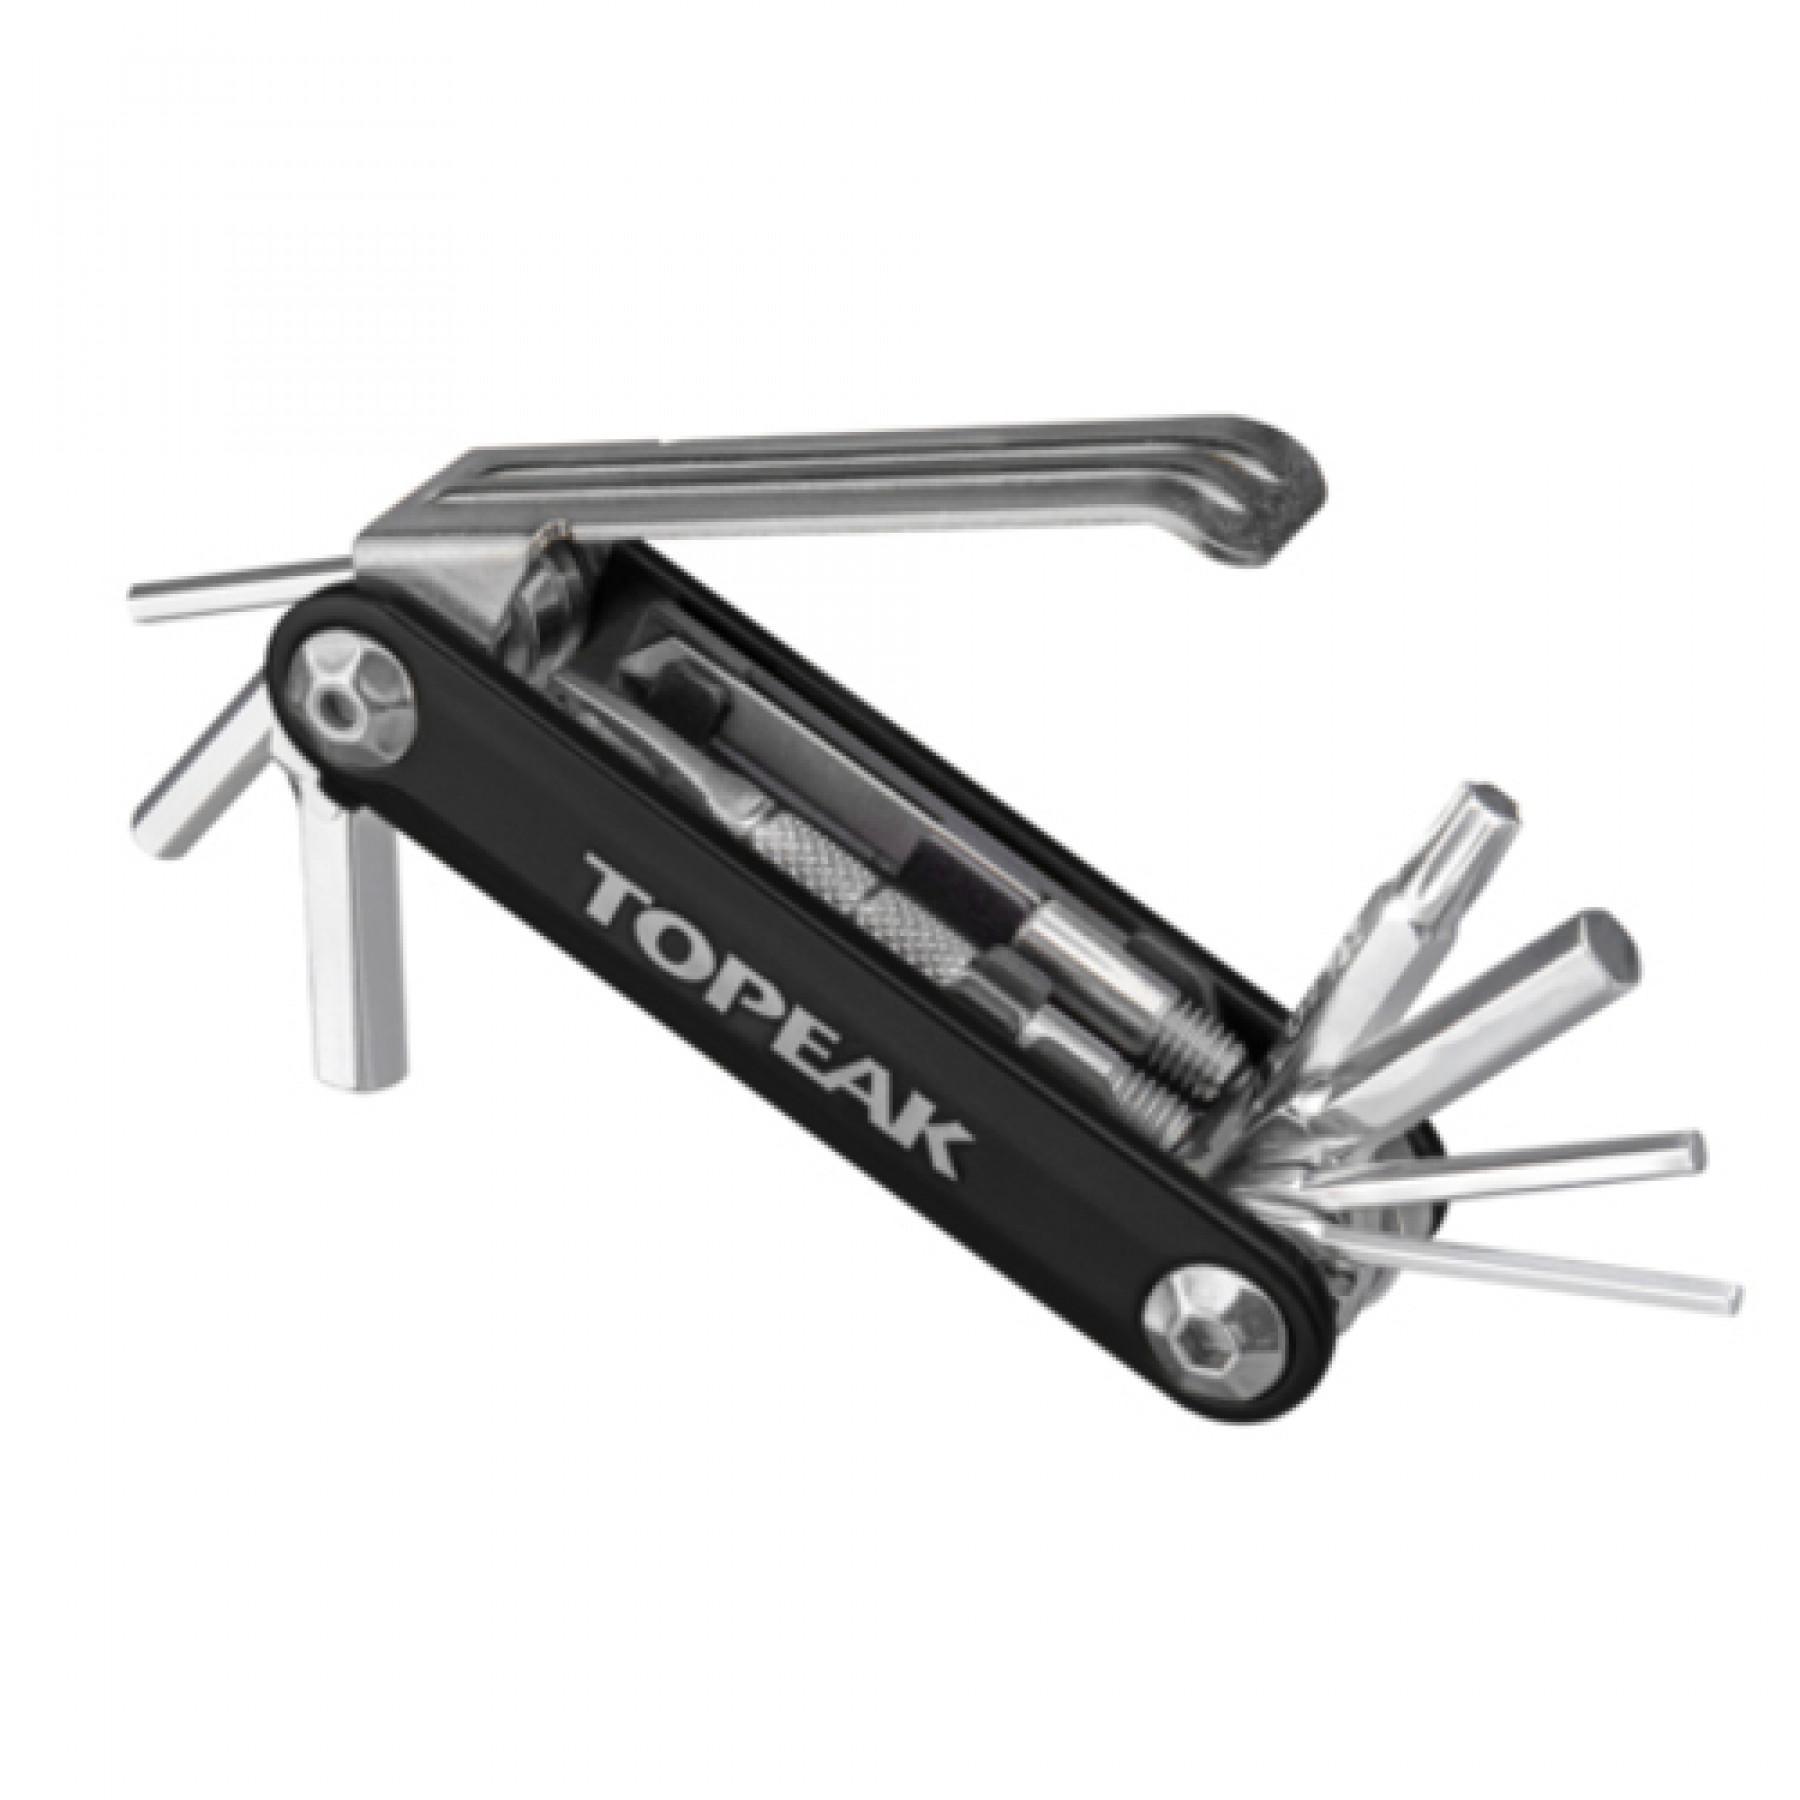 Multi-tool siodłowy Topeak 11